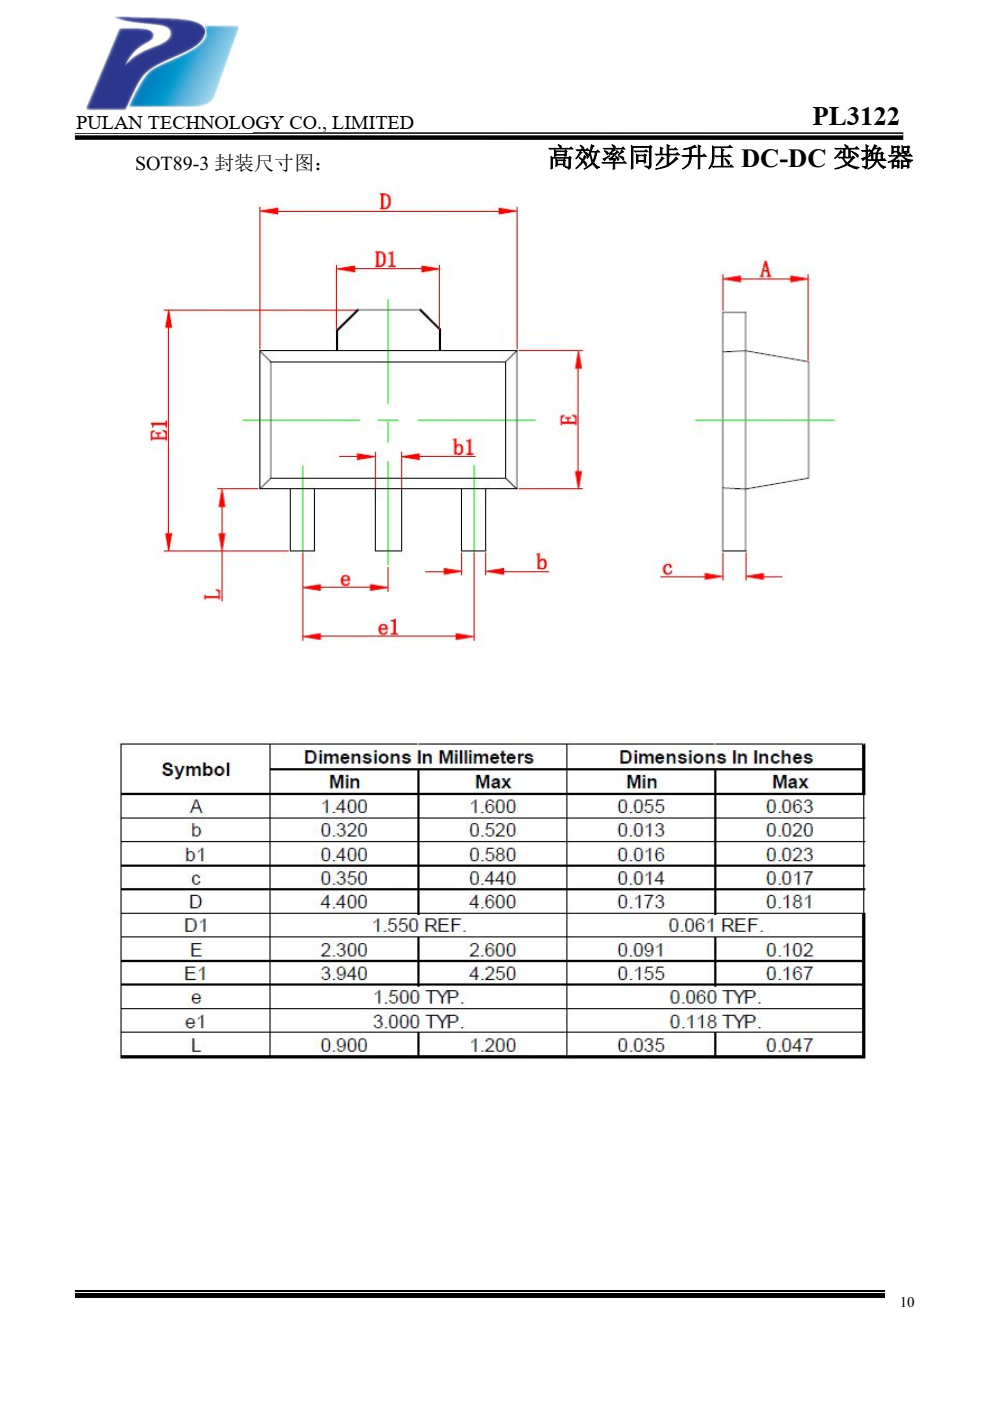 PL3122 是一款高效率、低功耗、低纹波 的PFM同步升压DC/DC变换器。